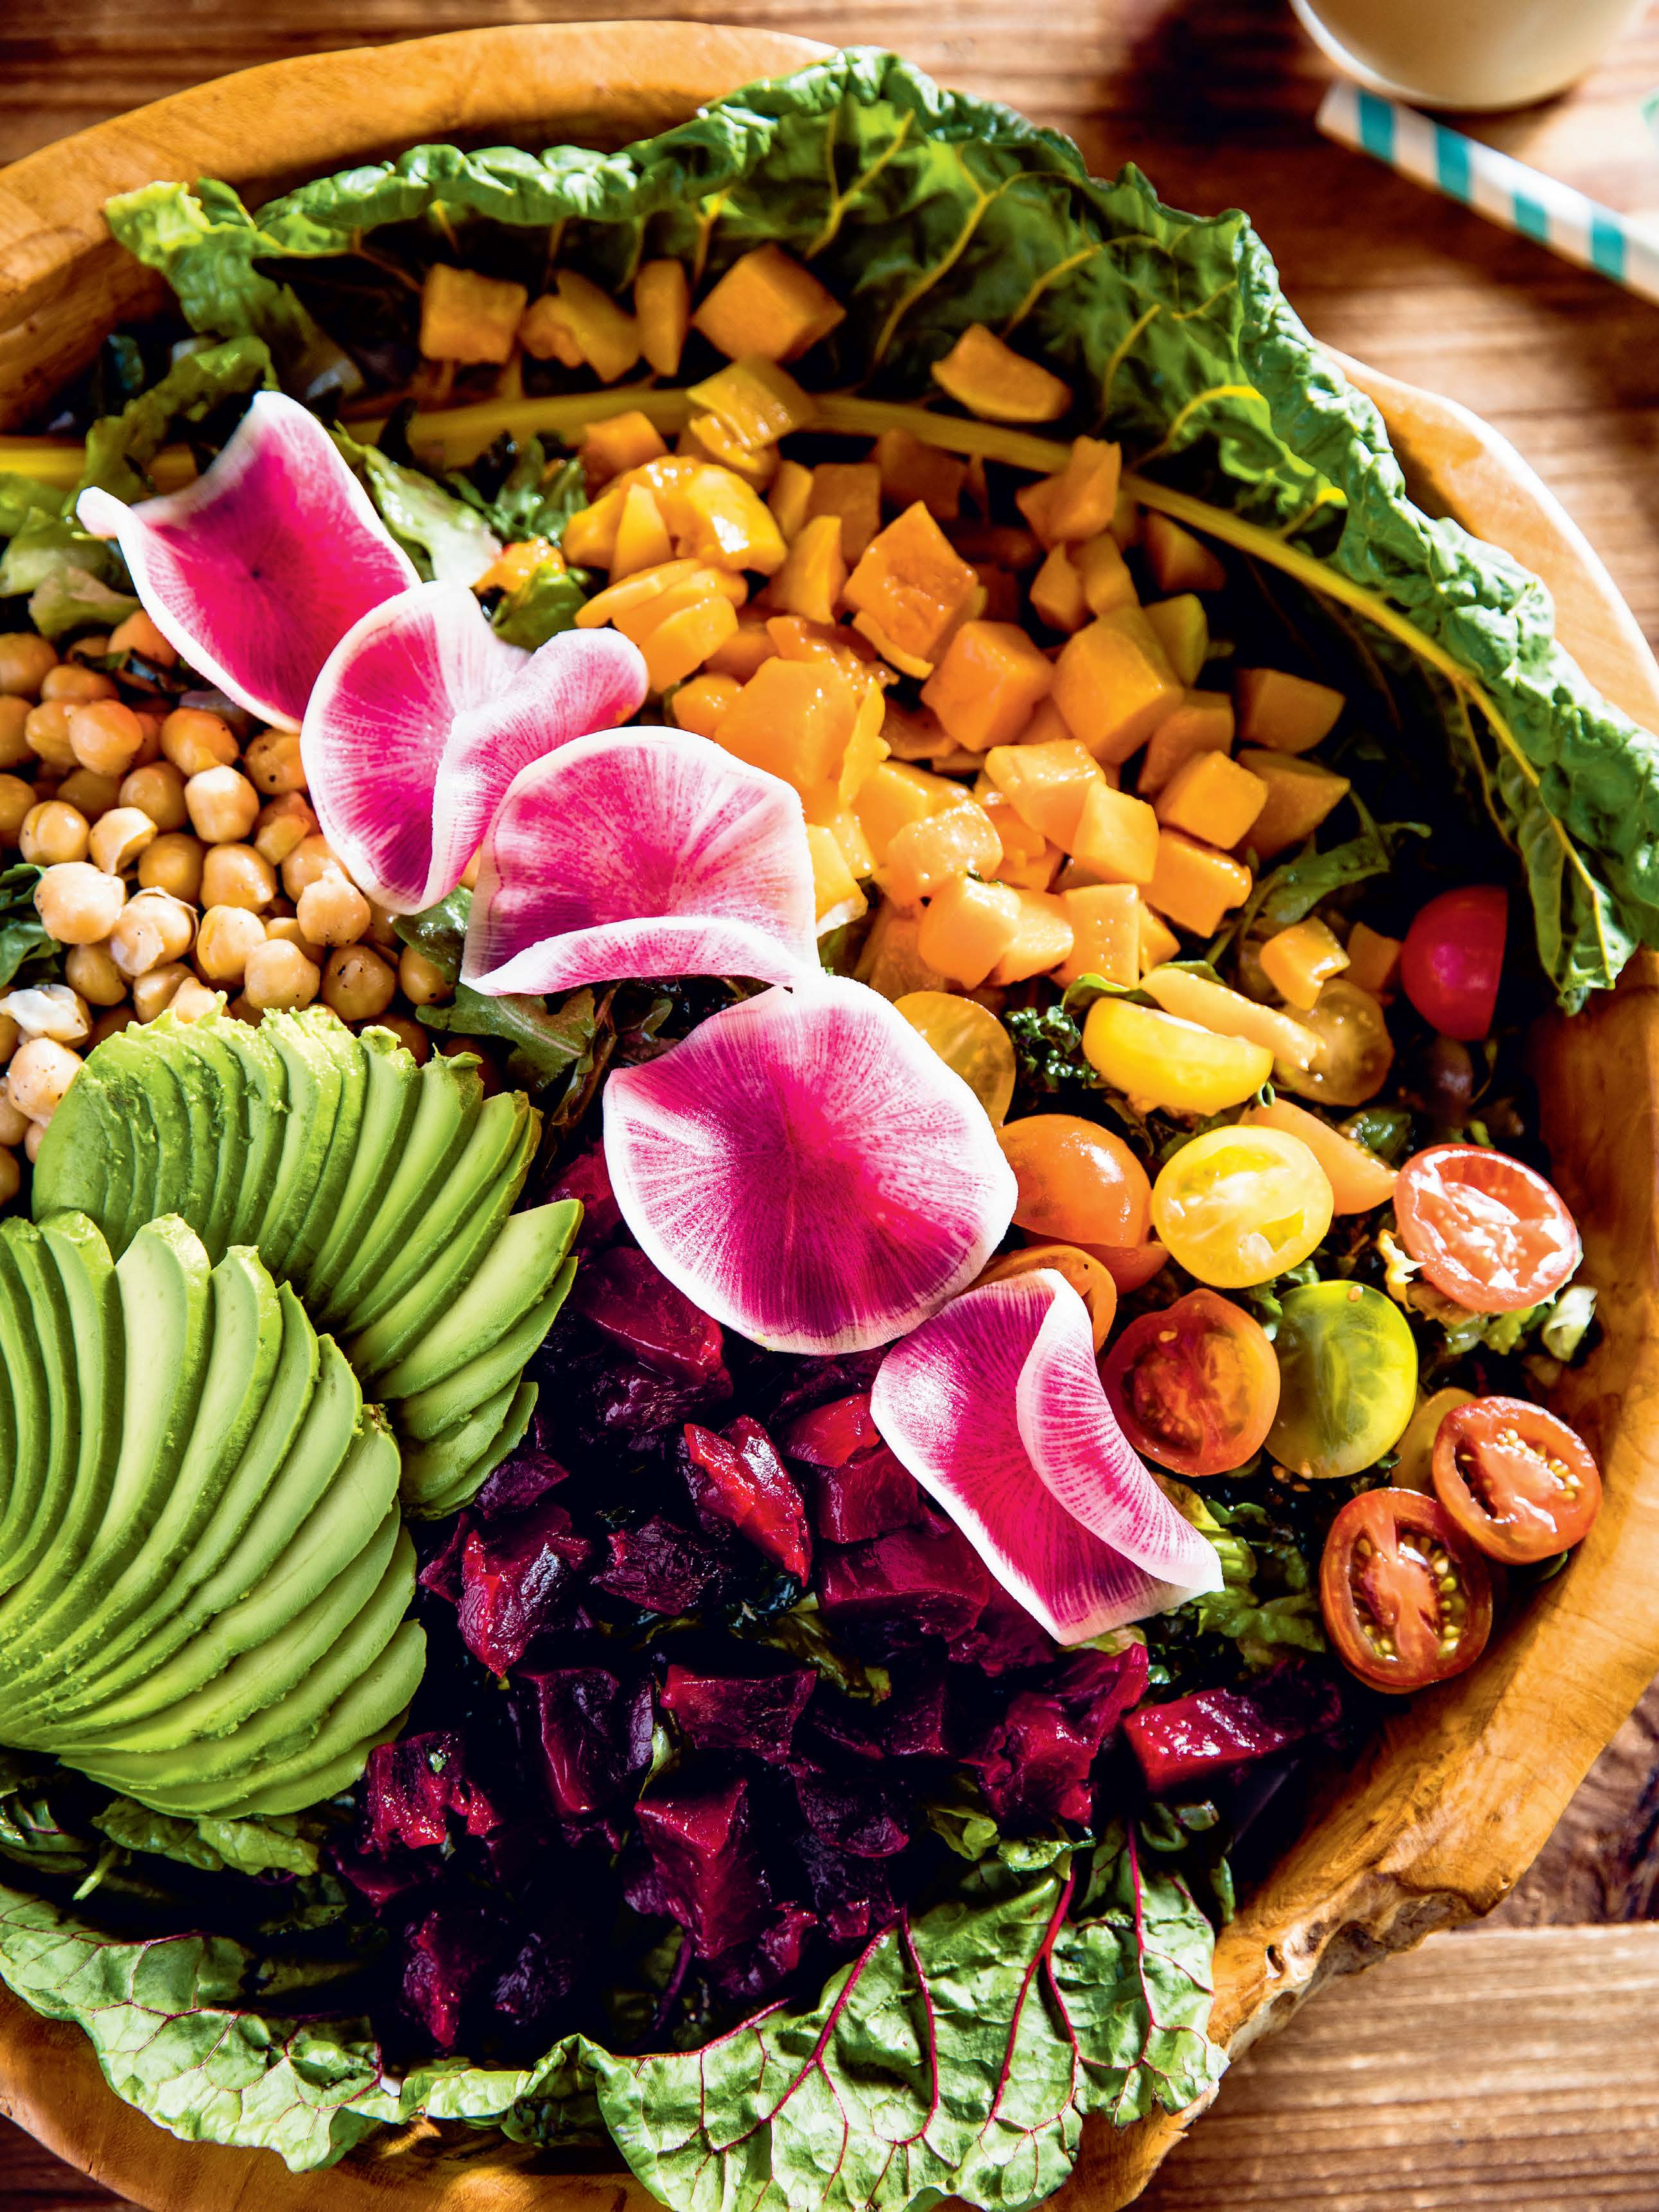 This Vegan Chopped Salad Is Like Tasting the Rainbow